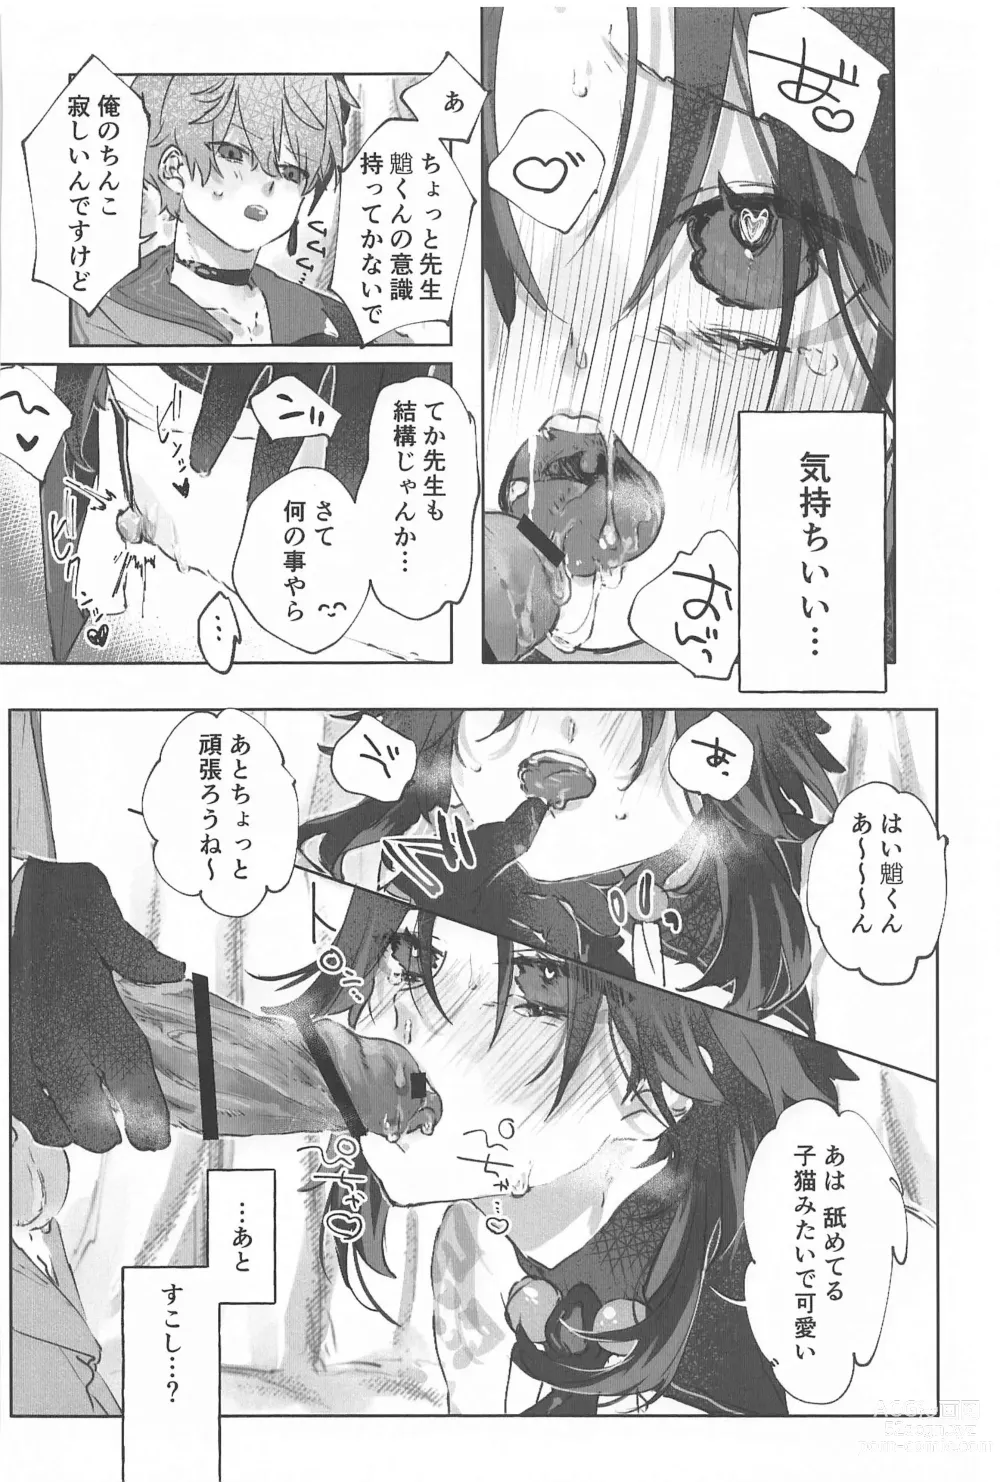 Page 40 of doujinshi Okawari.